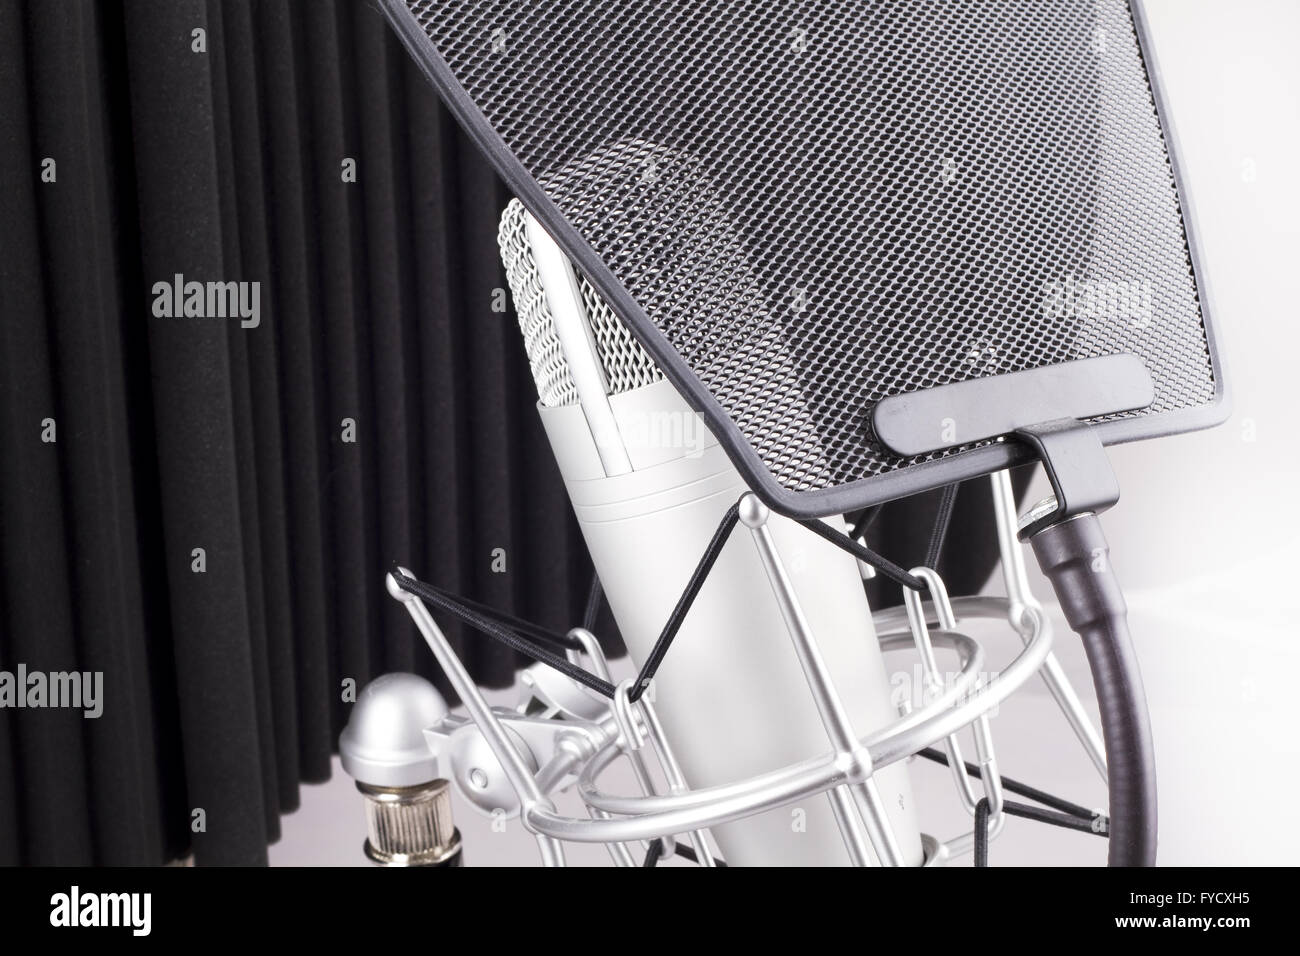 Professional studio microphone on white background Stock Photo